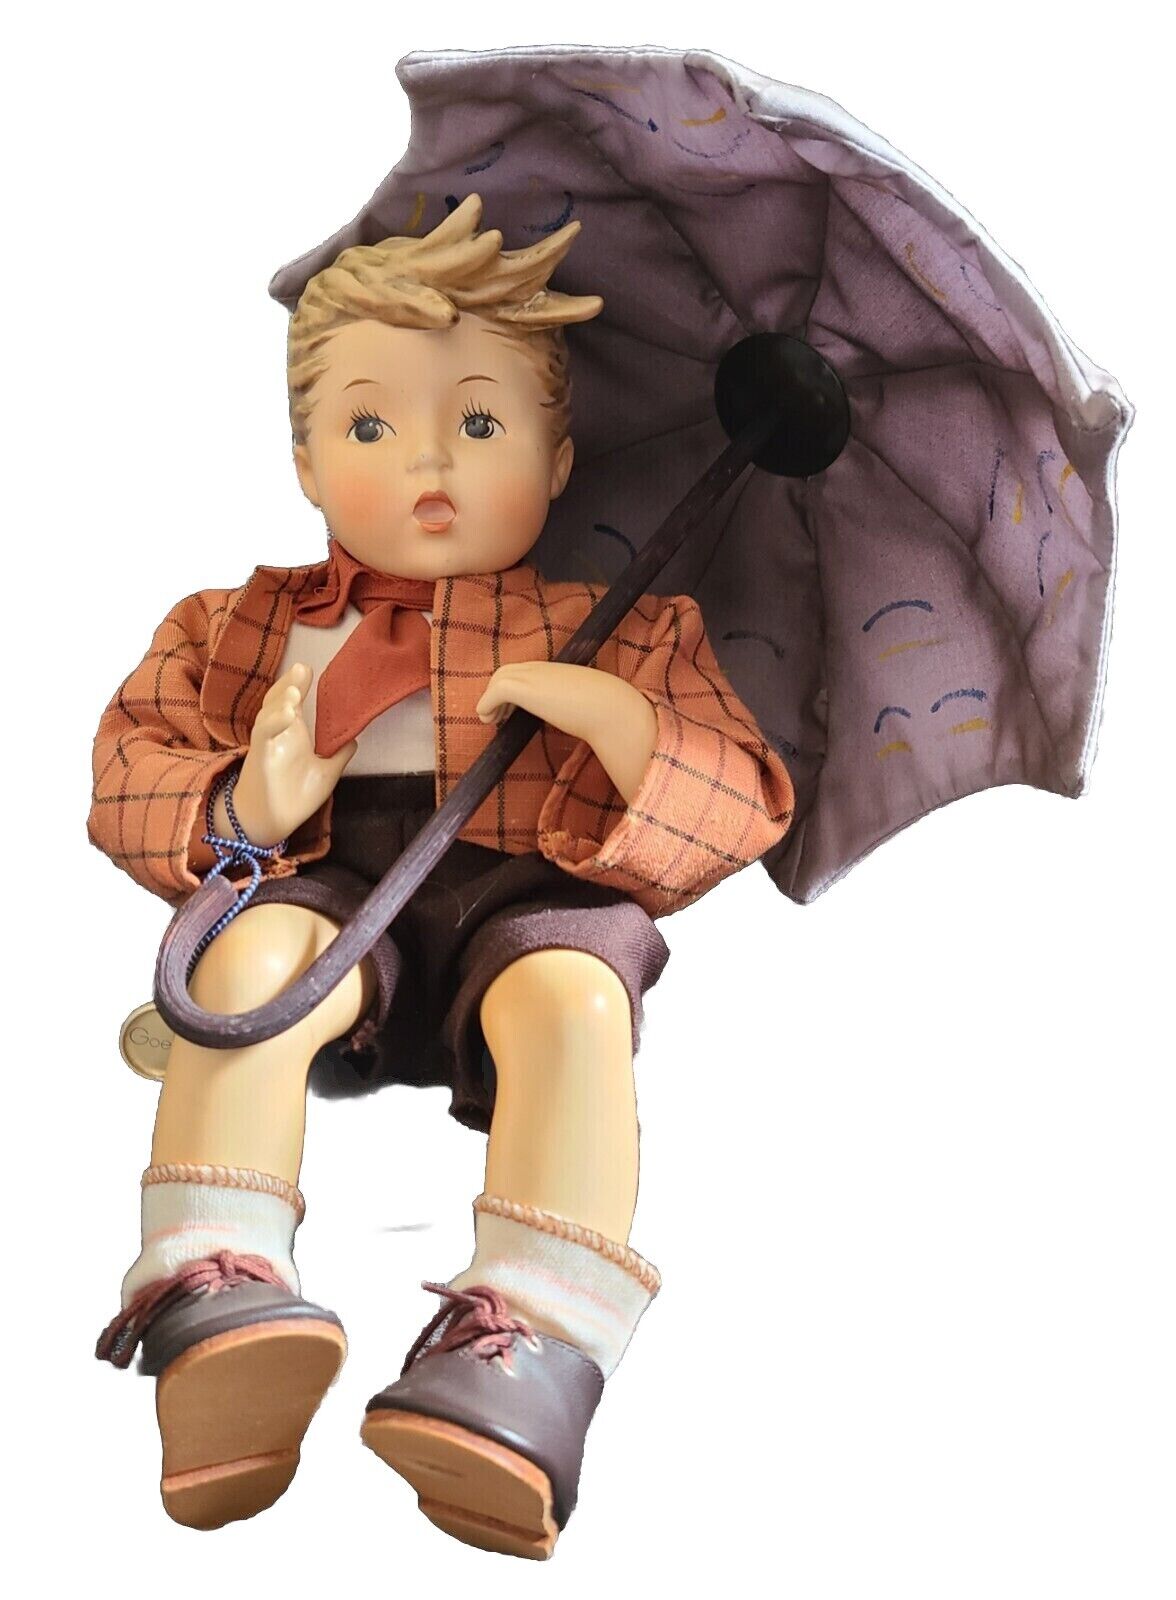 Hummel Goebel Germany Porcelain & Soft Pose-able Umbrella Boy 8.5” Doll w Box